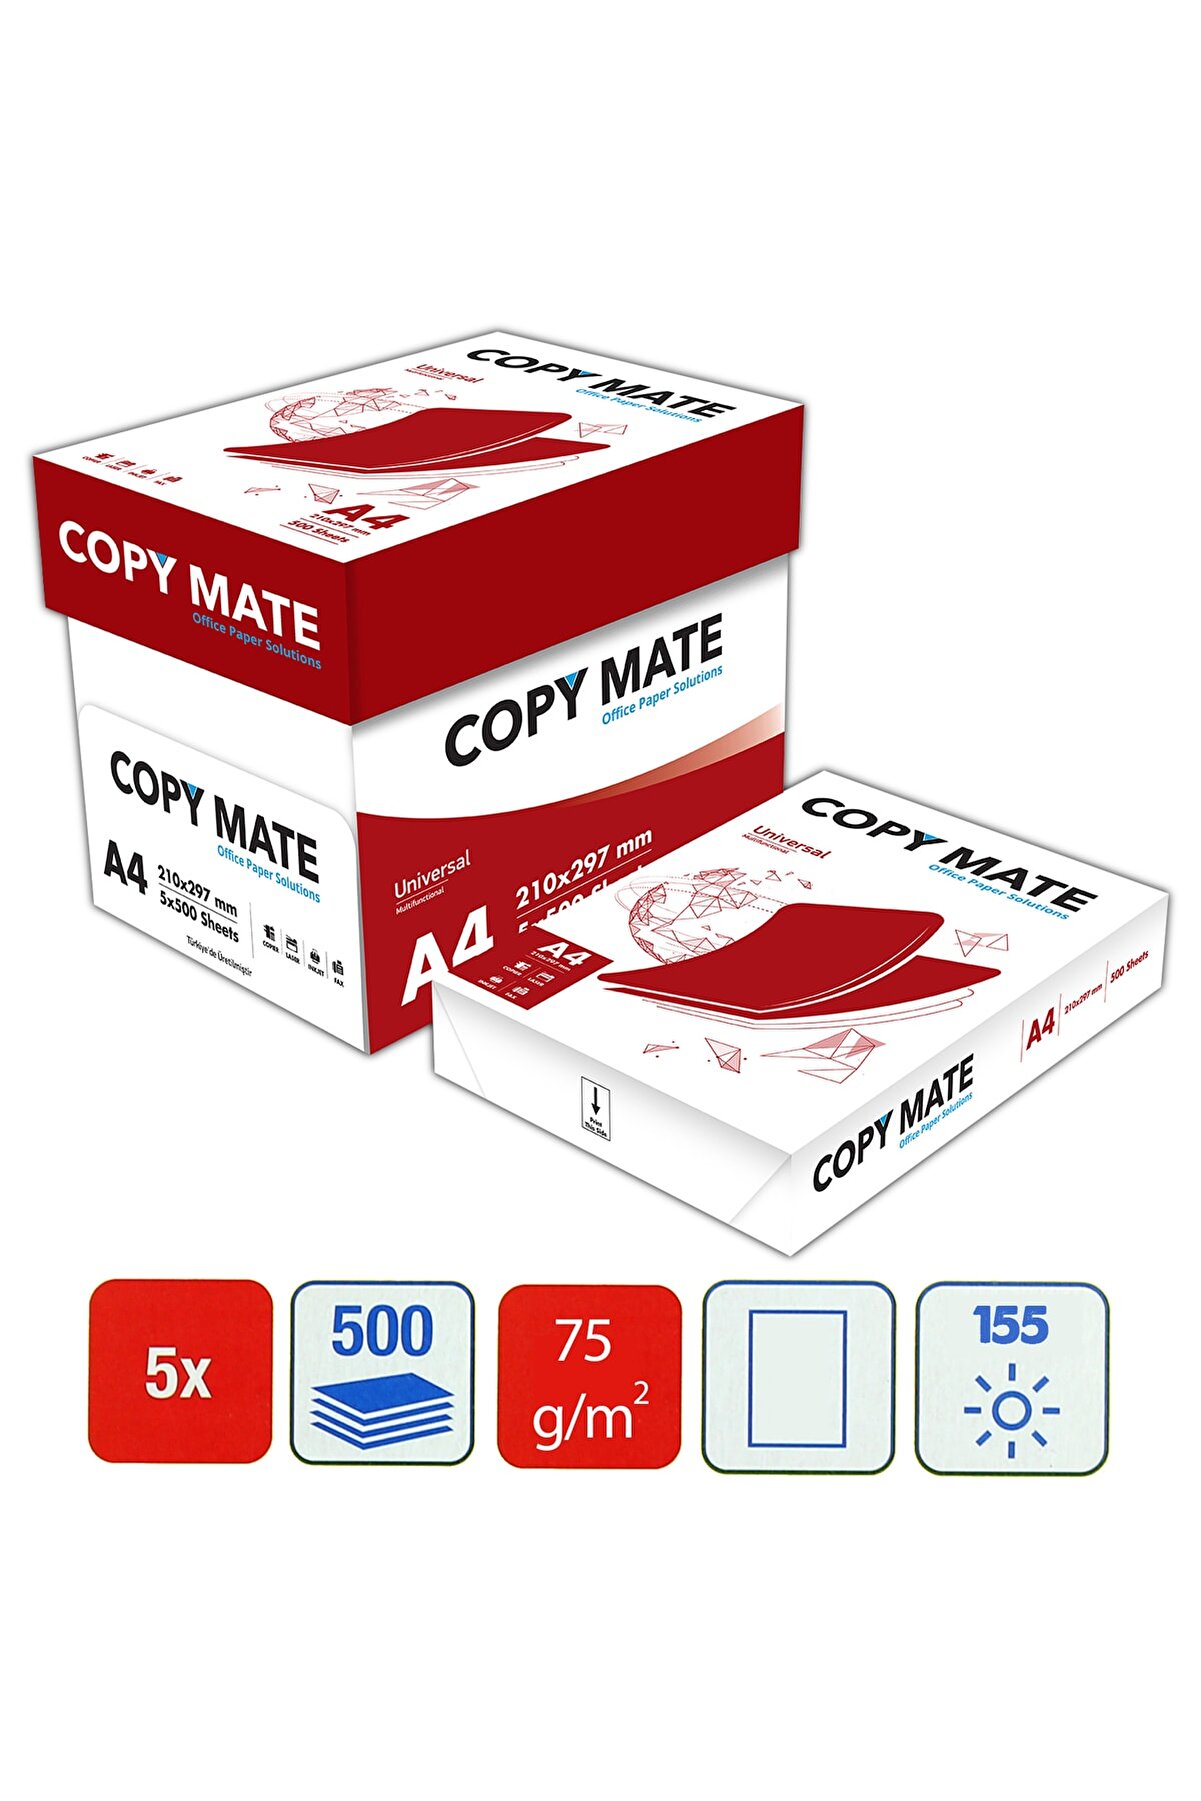 Universe Copy Mate A4 Fotokopi Kağıdı 1 Koli 5 Li Paket 2500 Adet